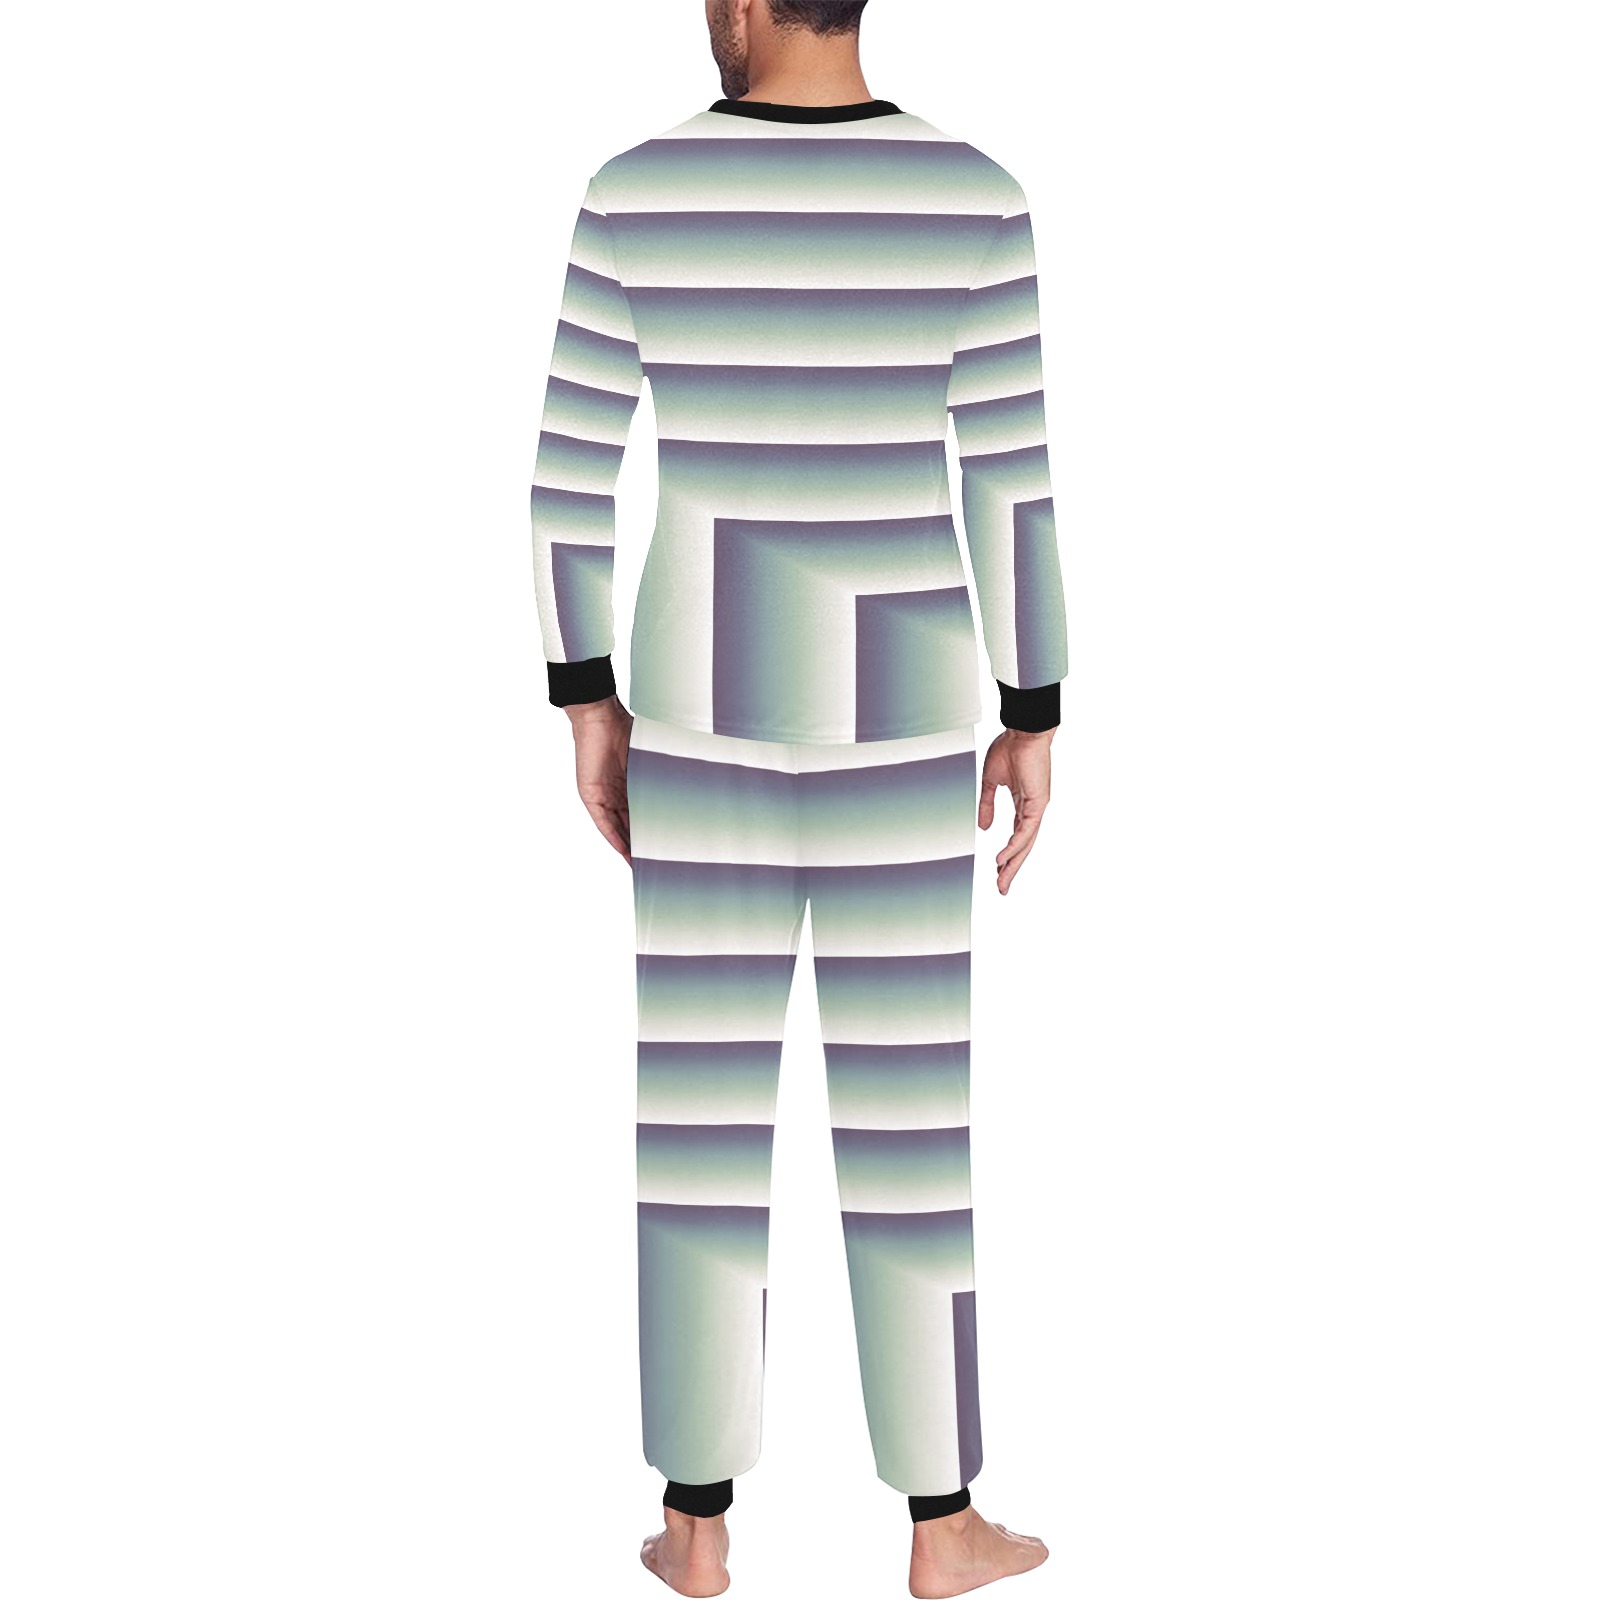 Gradient (44) Men's All Over Print Pajama Set